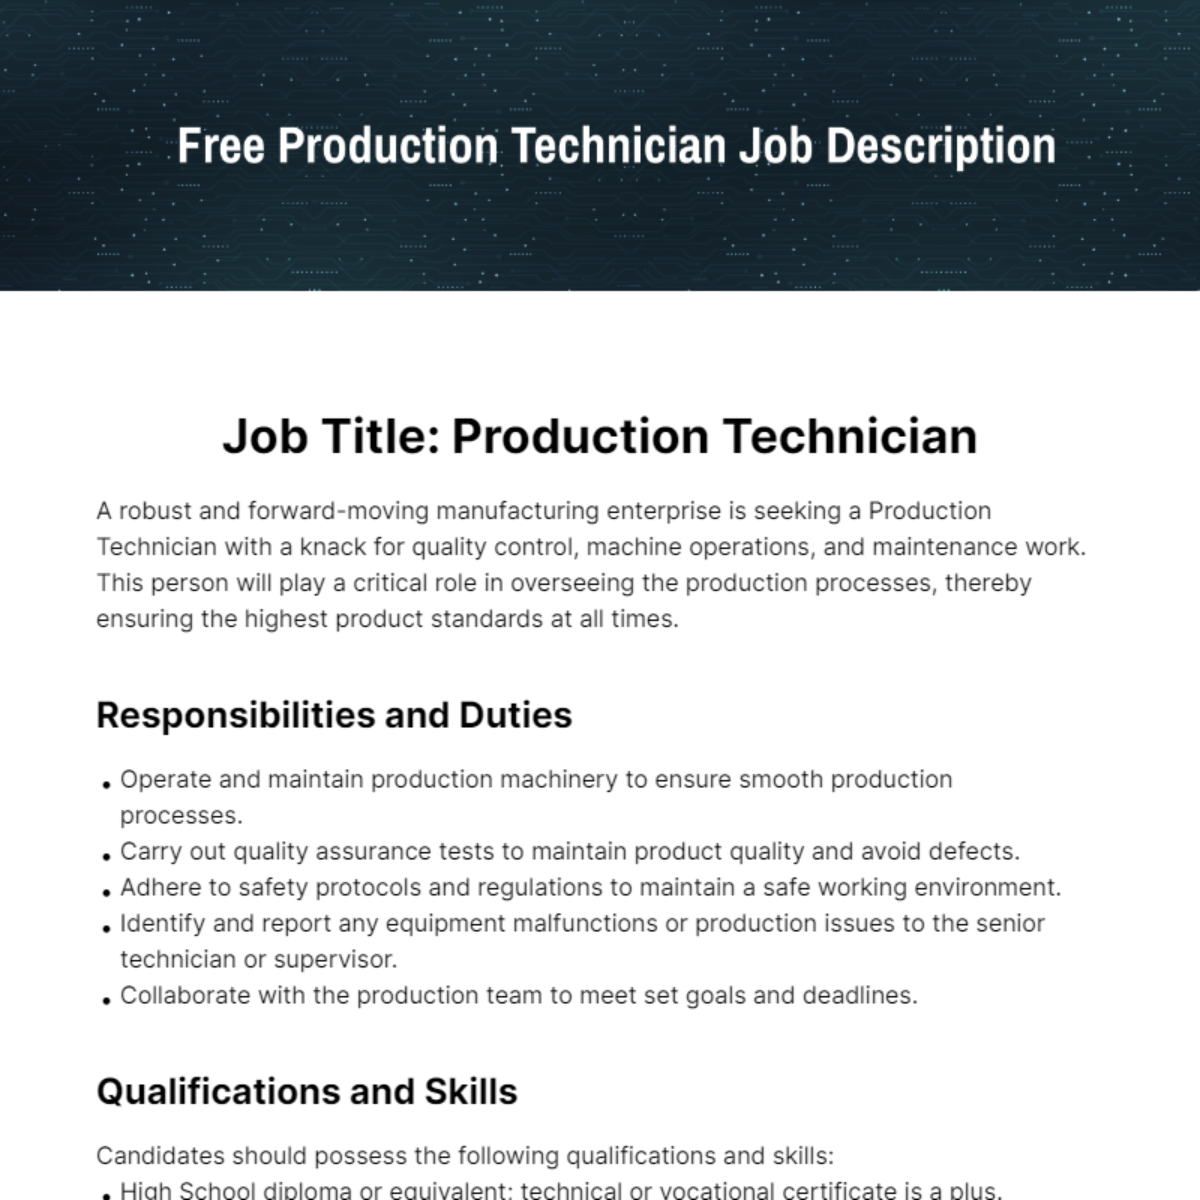 Free Production Technician Job Description Template